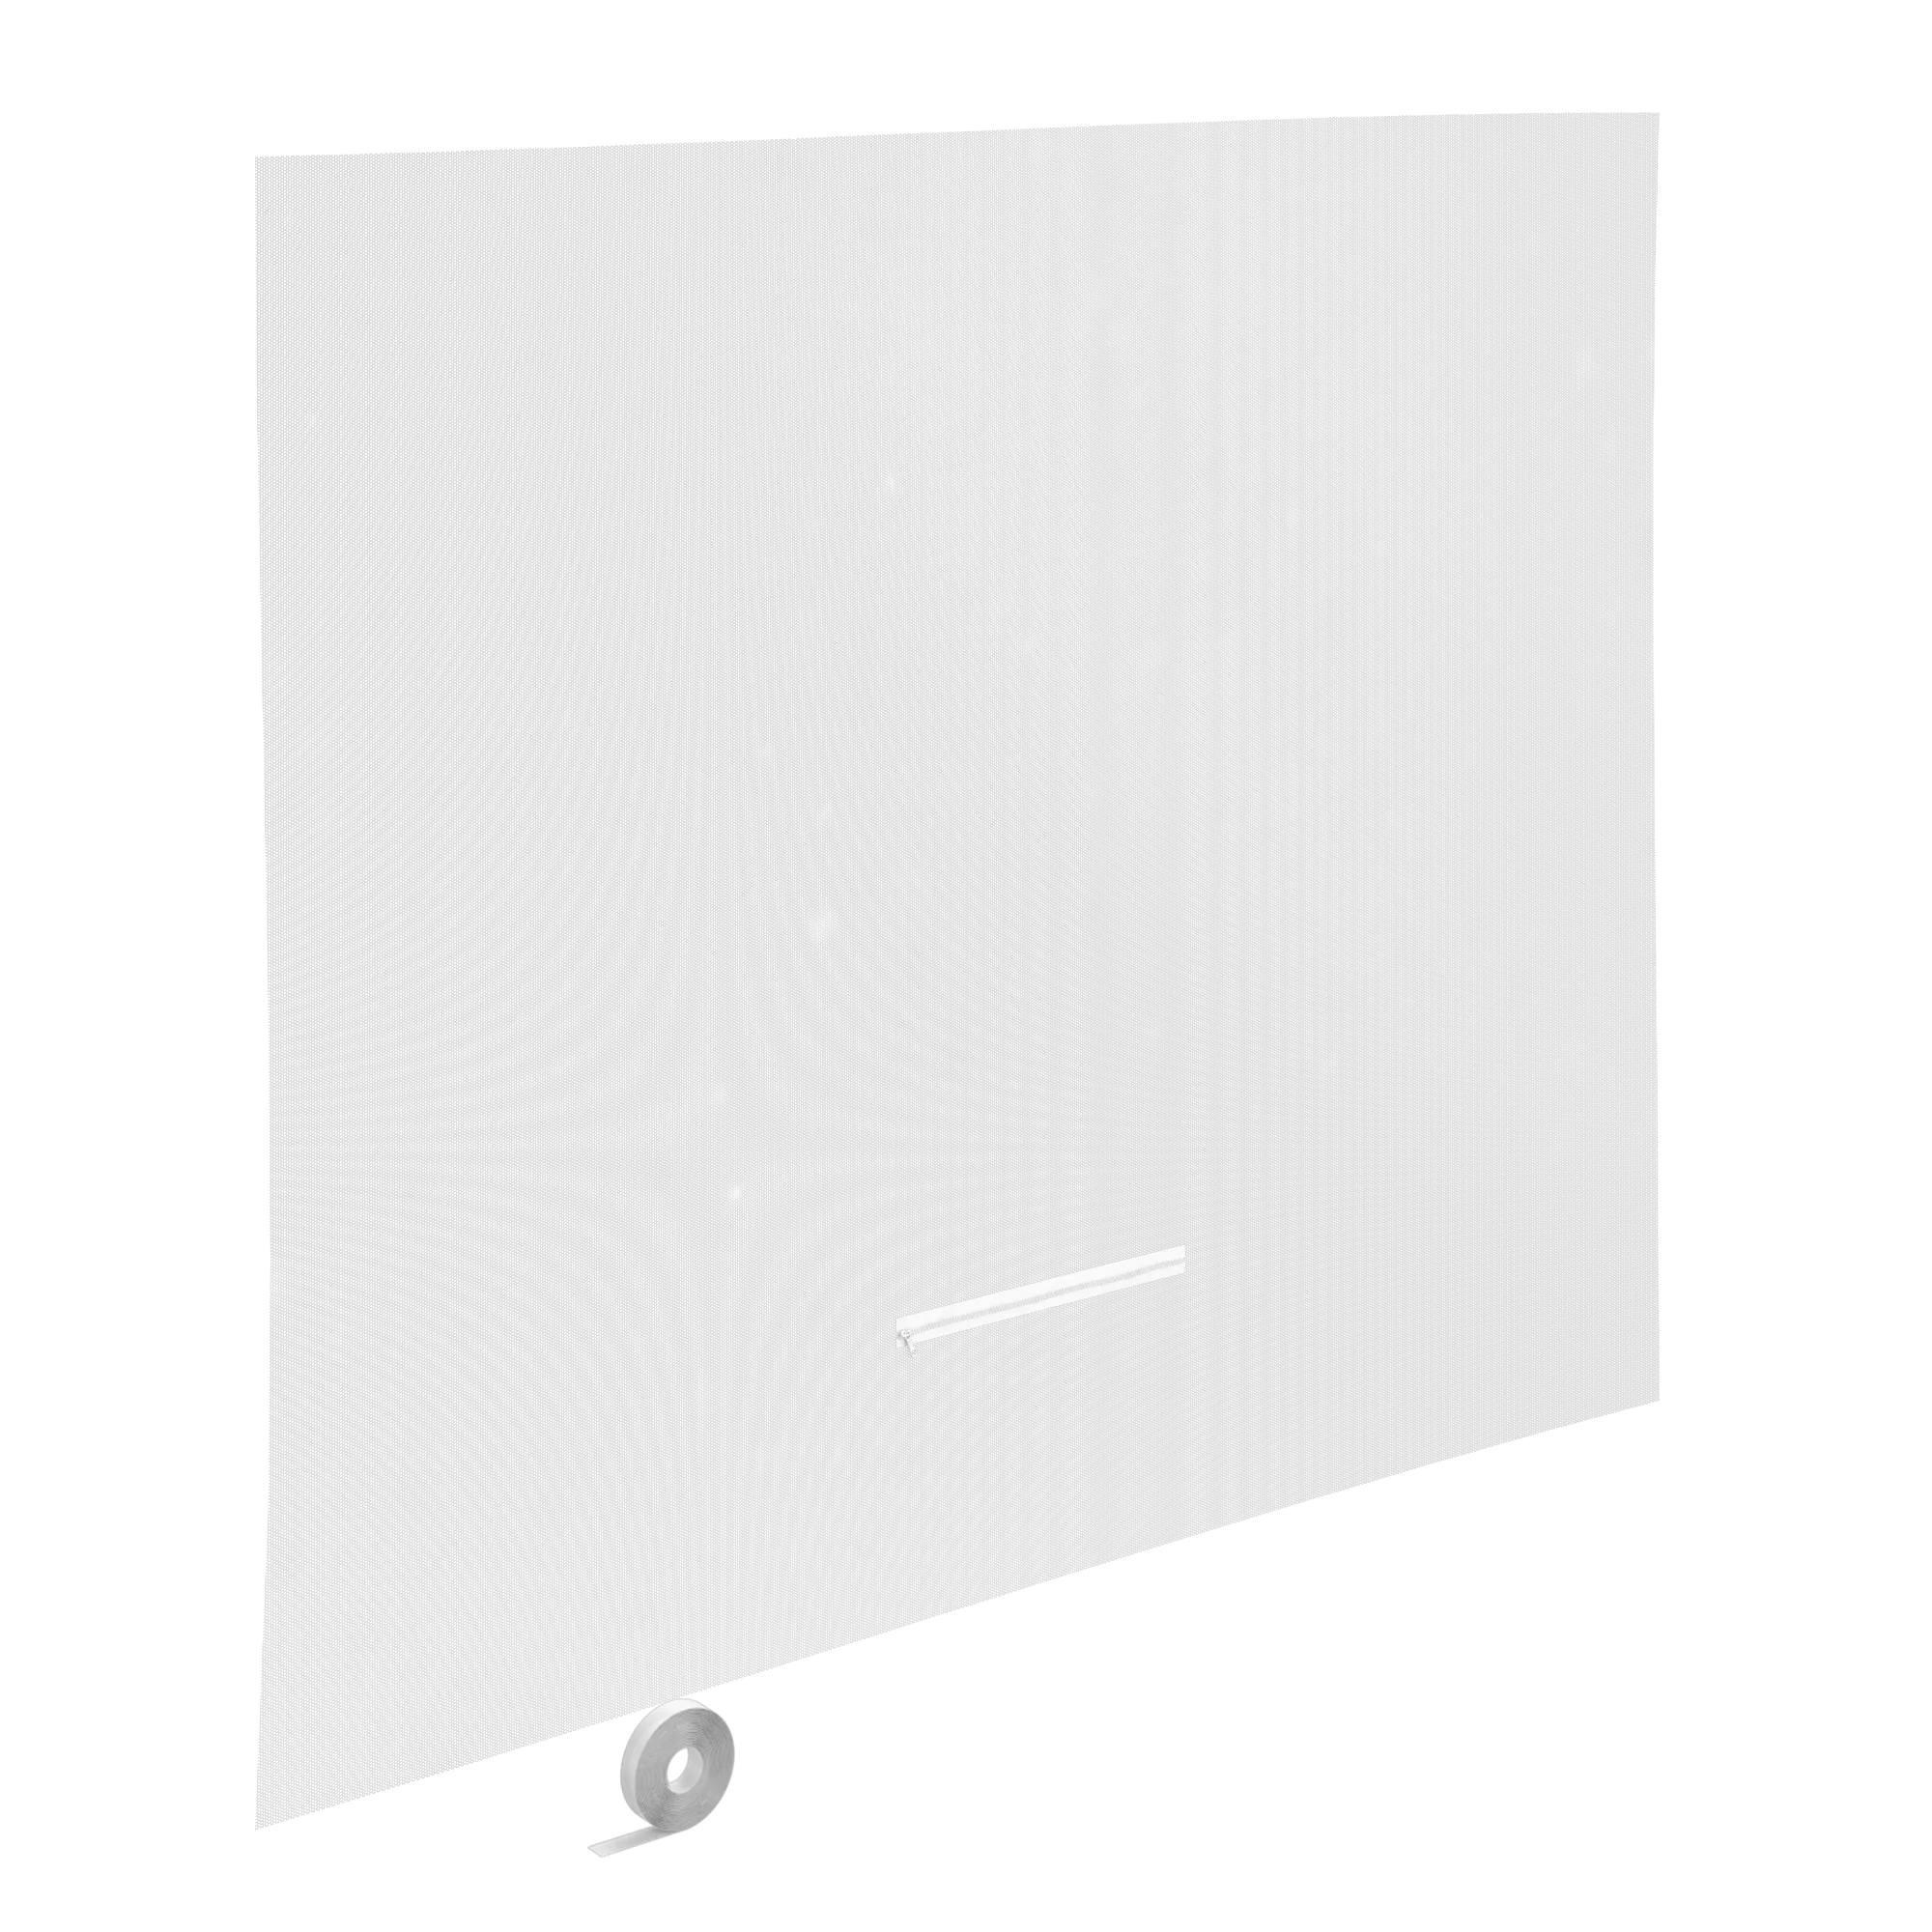 Tela de mosquitera fija blanca para ventana techo con velcro adhesivo 150x180cm